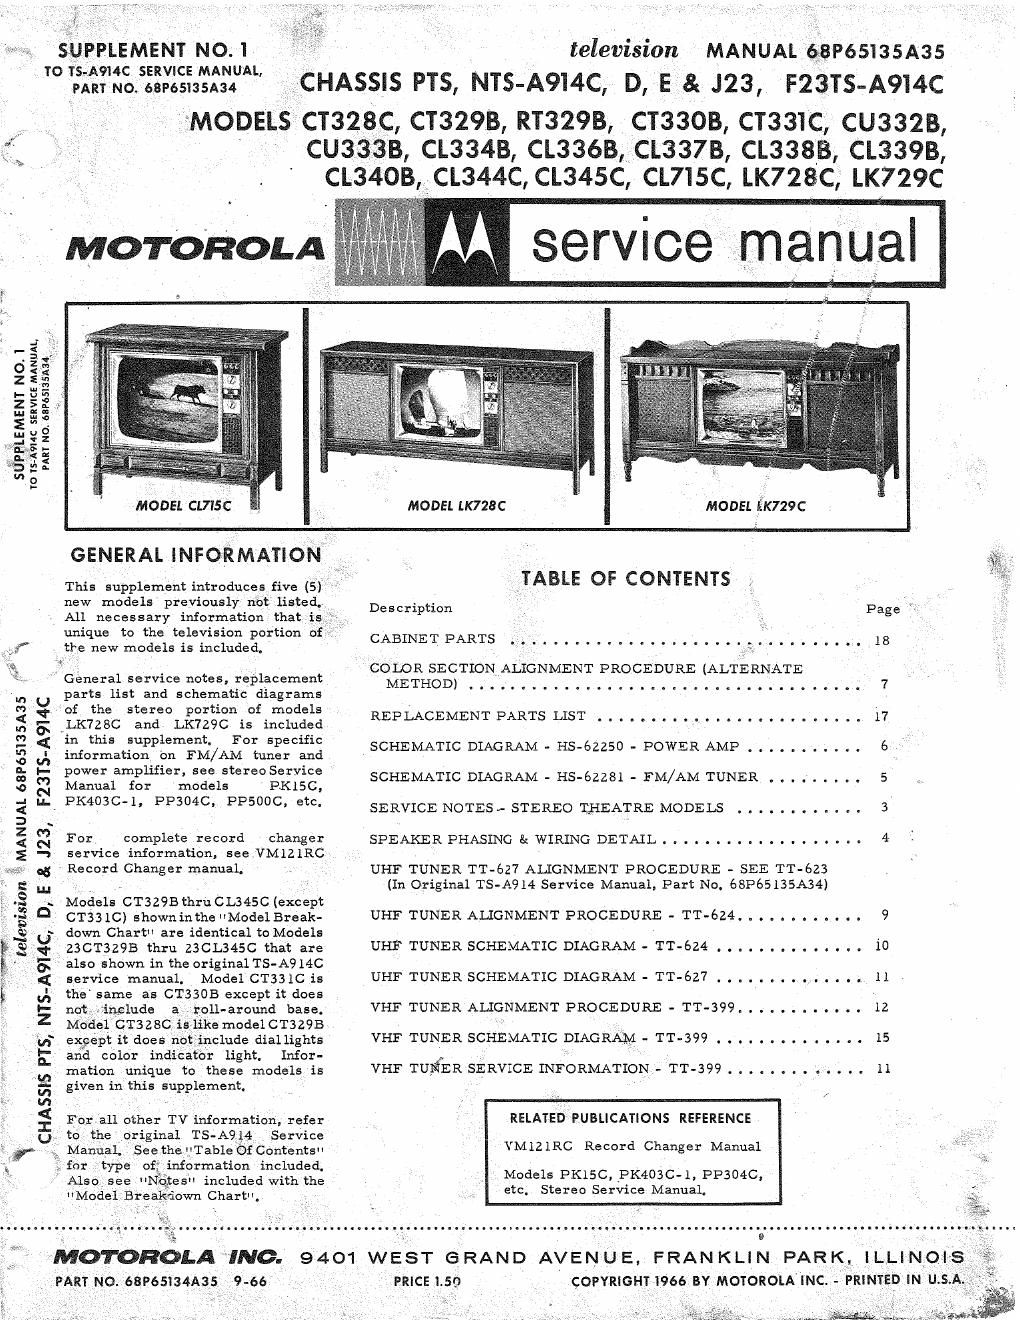 motorola cl 344 c service manual